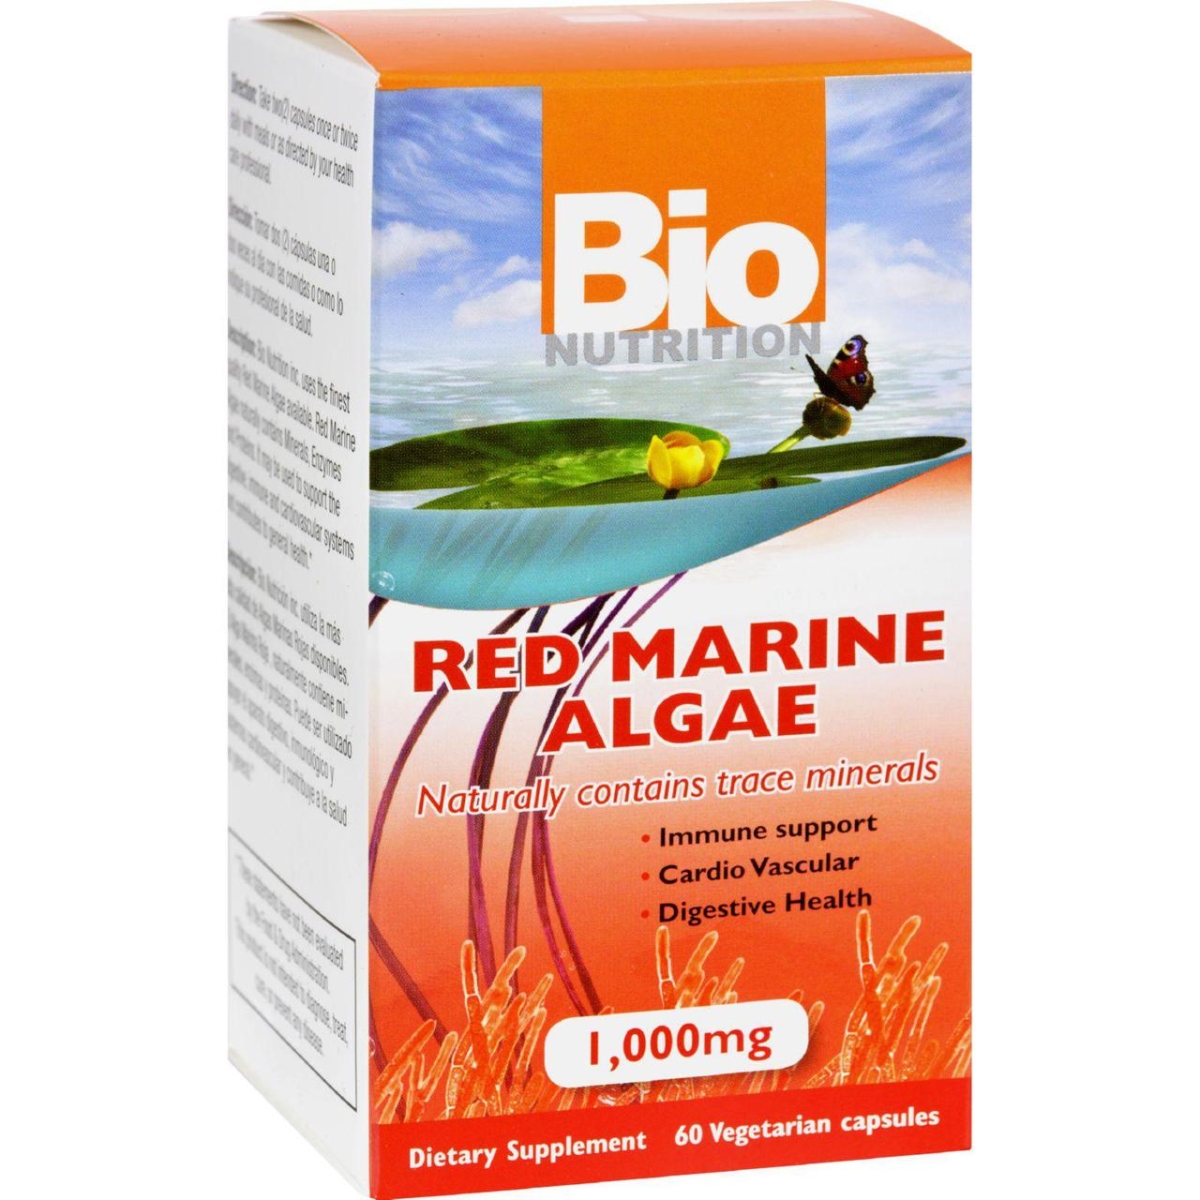 Bio Nutrition Hg1147479 1000 Mg Red Marine Algae - 60 Vegetarian Capsules